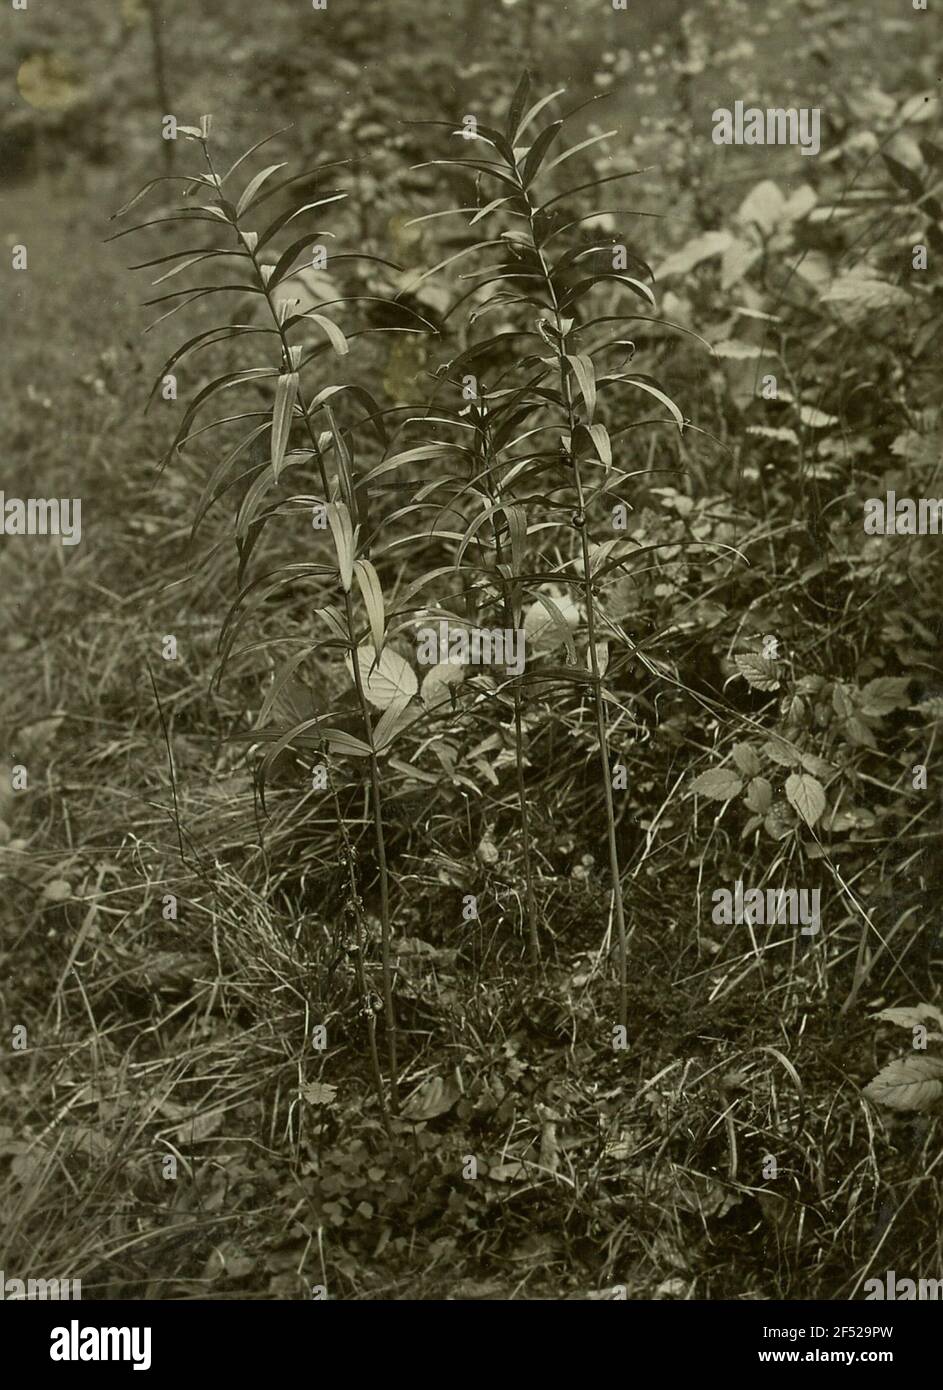 Whirl-leaved white vein (polygonatum verticillatum (L.) all.) In Fruit, Gisissy Stock Photo